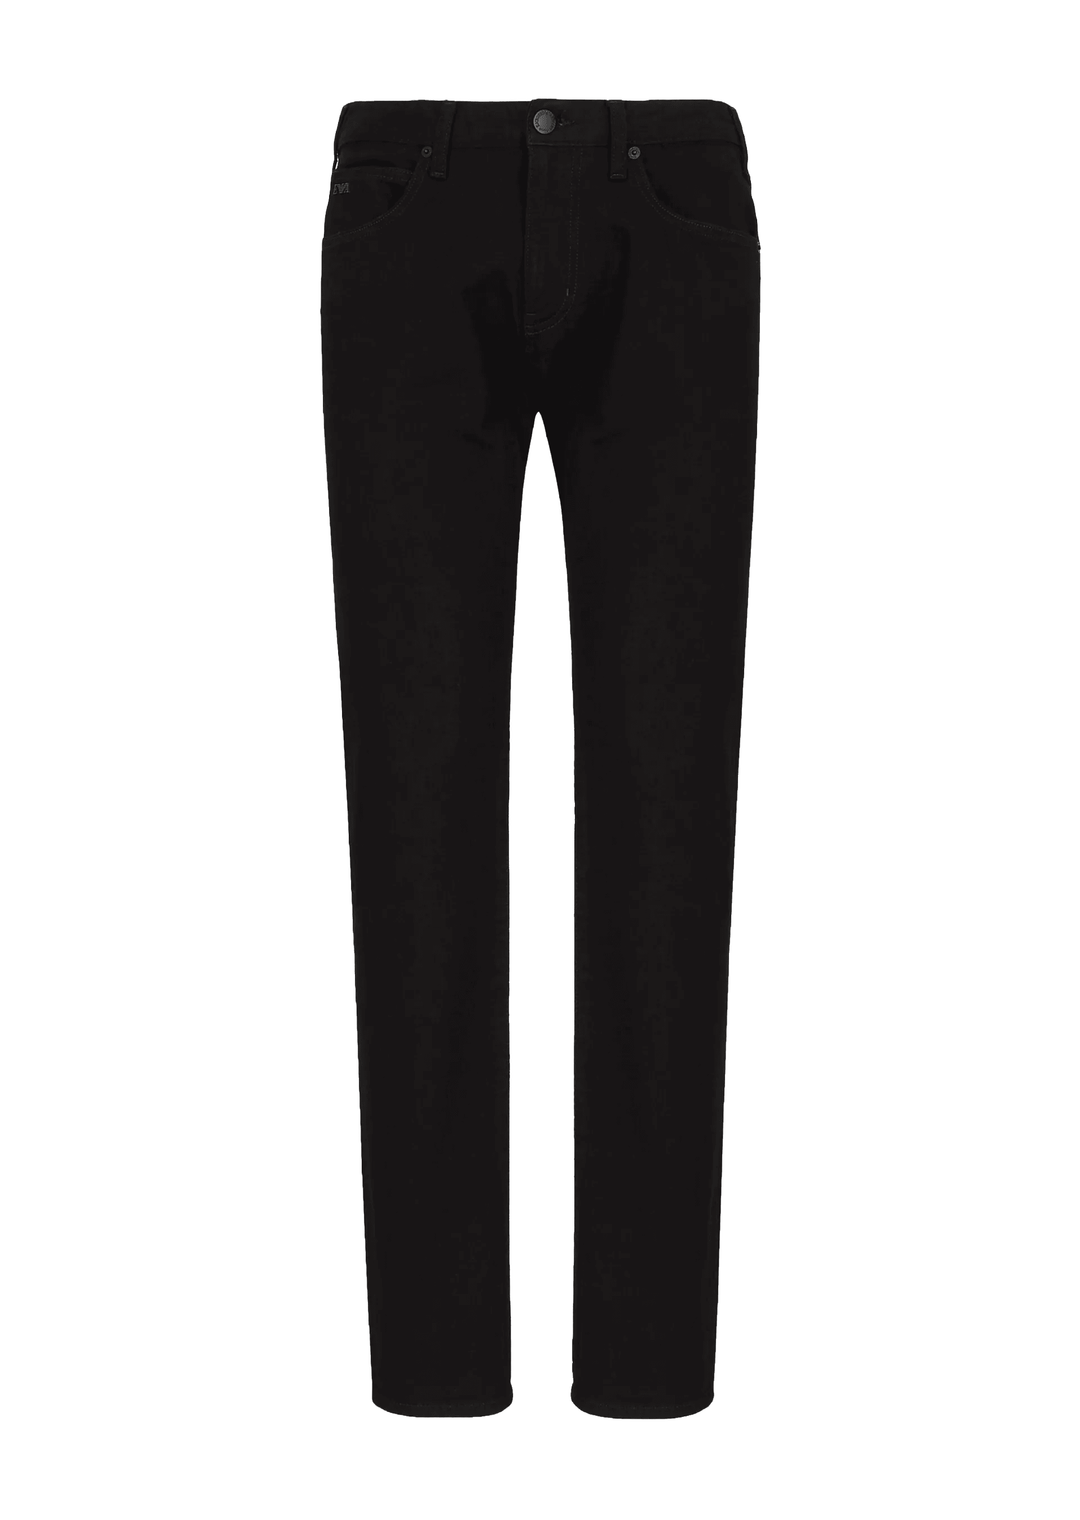 Emporio Armani Jeans J45 Regular Fit Black - Urban Menswear